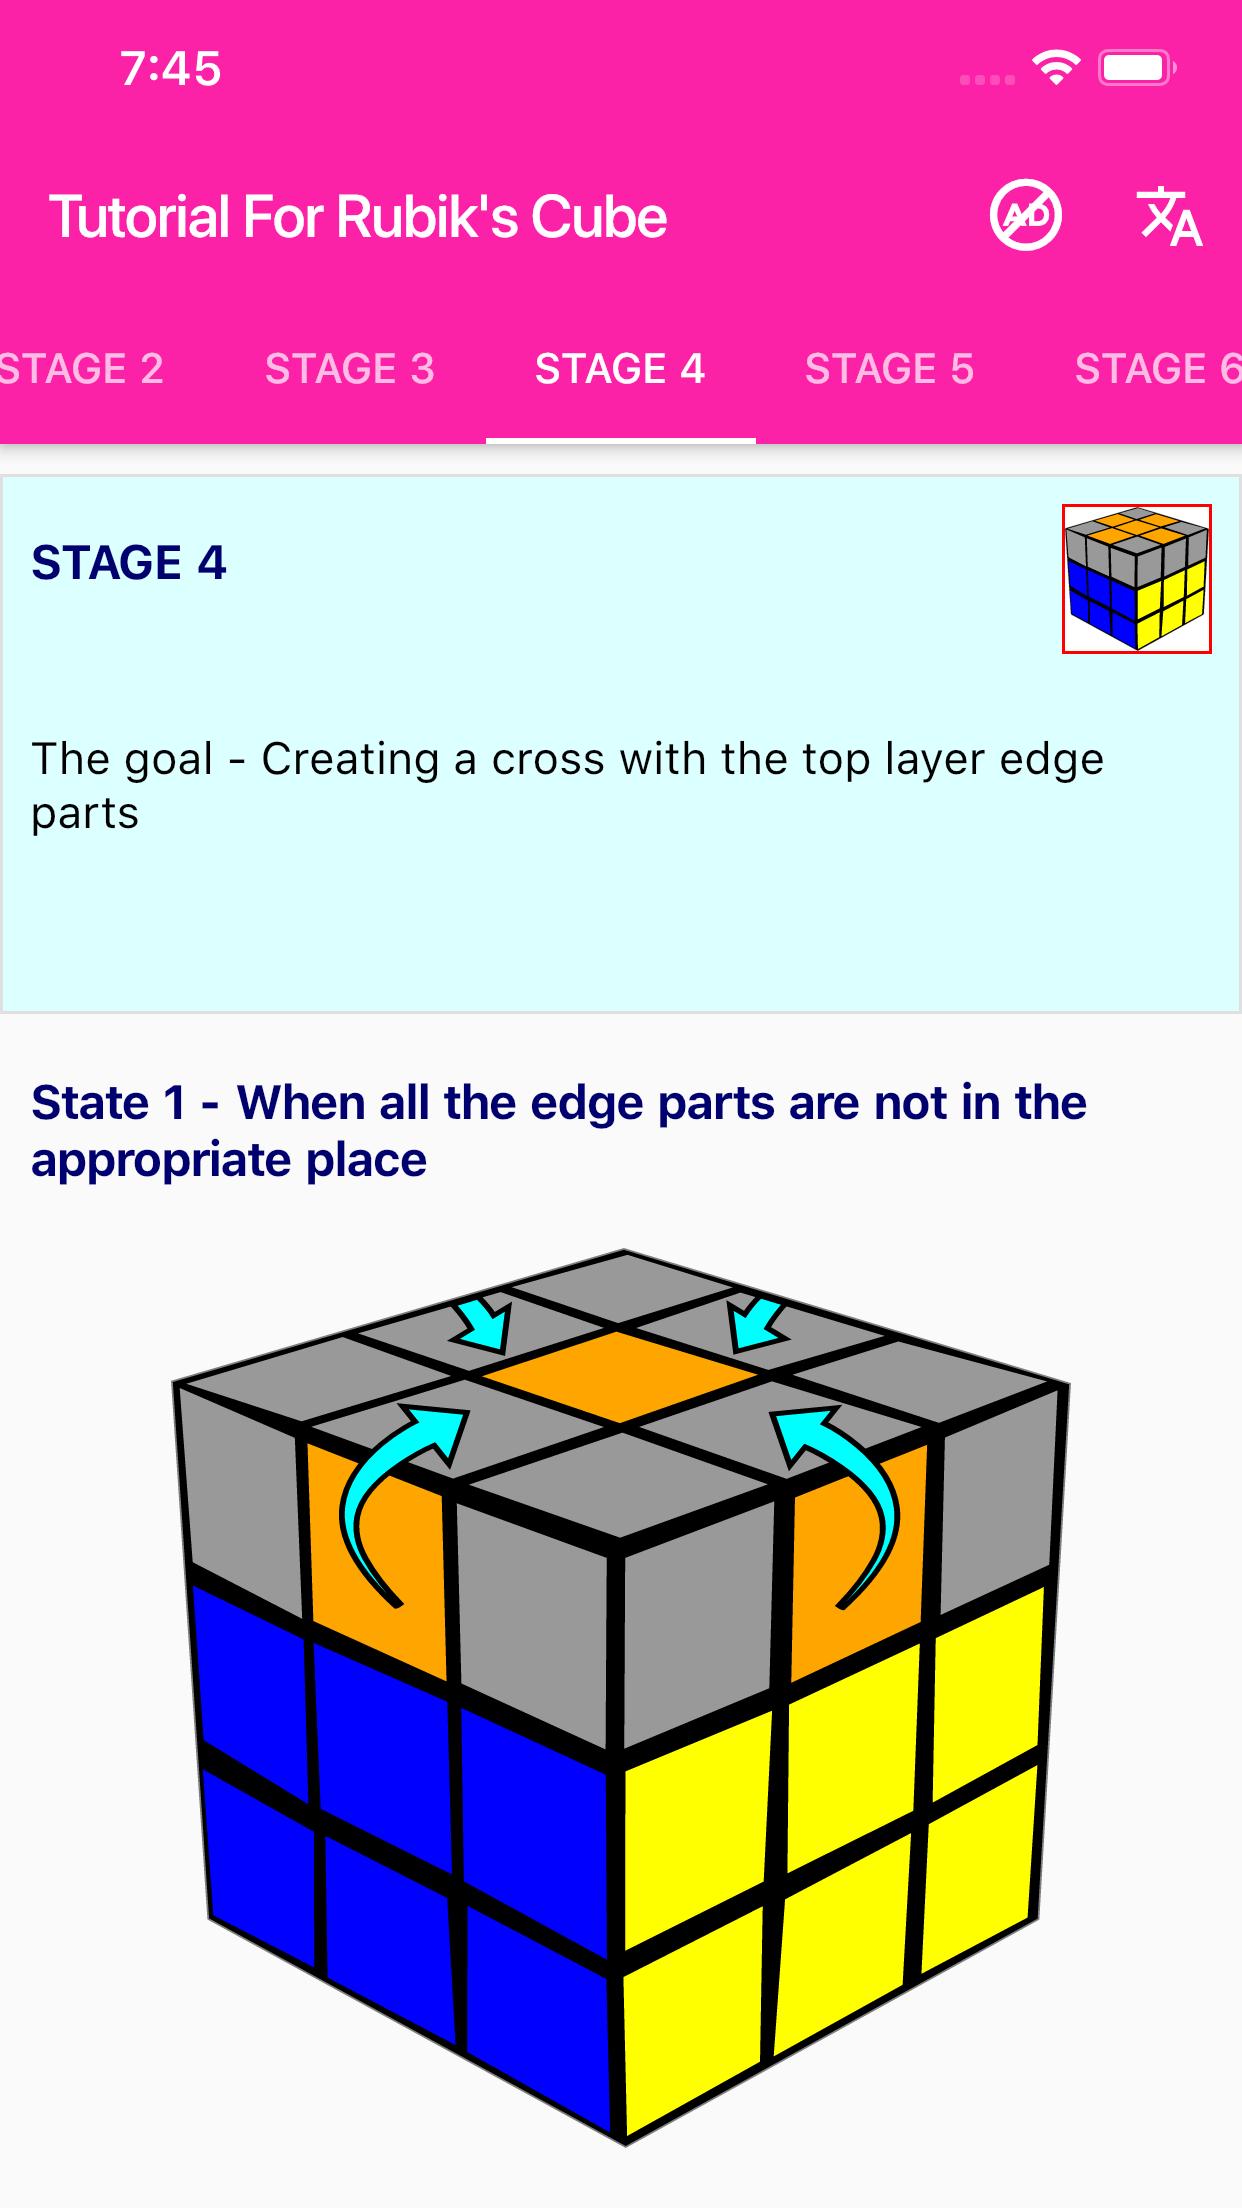 Сборка кубика 3 слой. Сборка последнего слоя кубика Рубика 3х3. Формулы кубика Рубика 3х3. Схема сборки кубика Рубика 3 слой. Схема кубика Рубика 3х3.